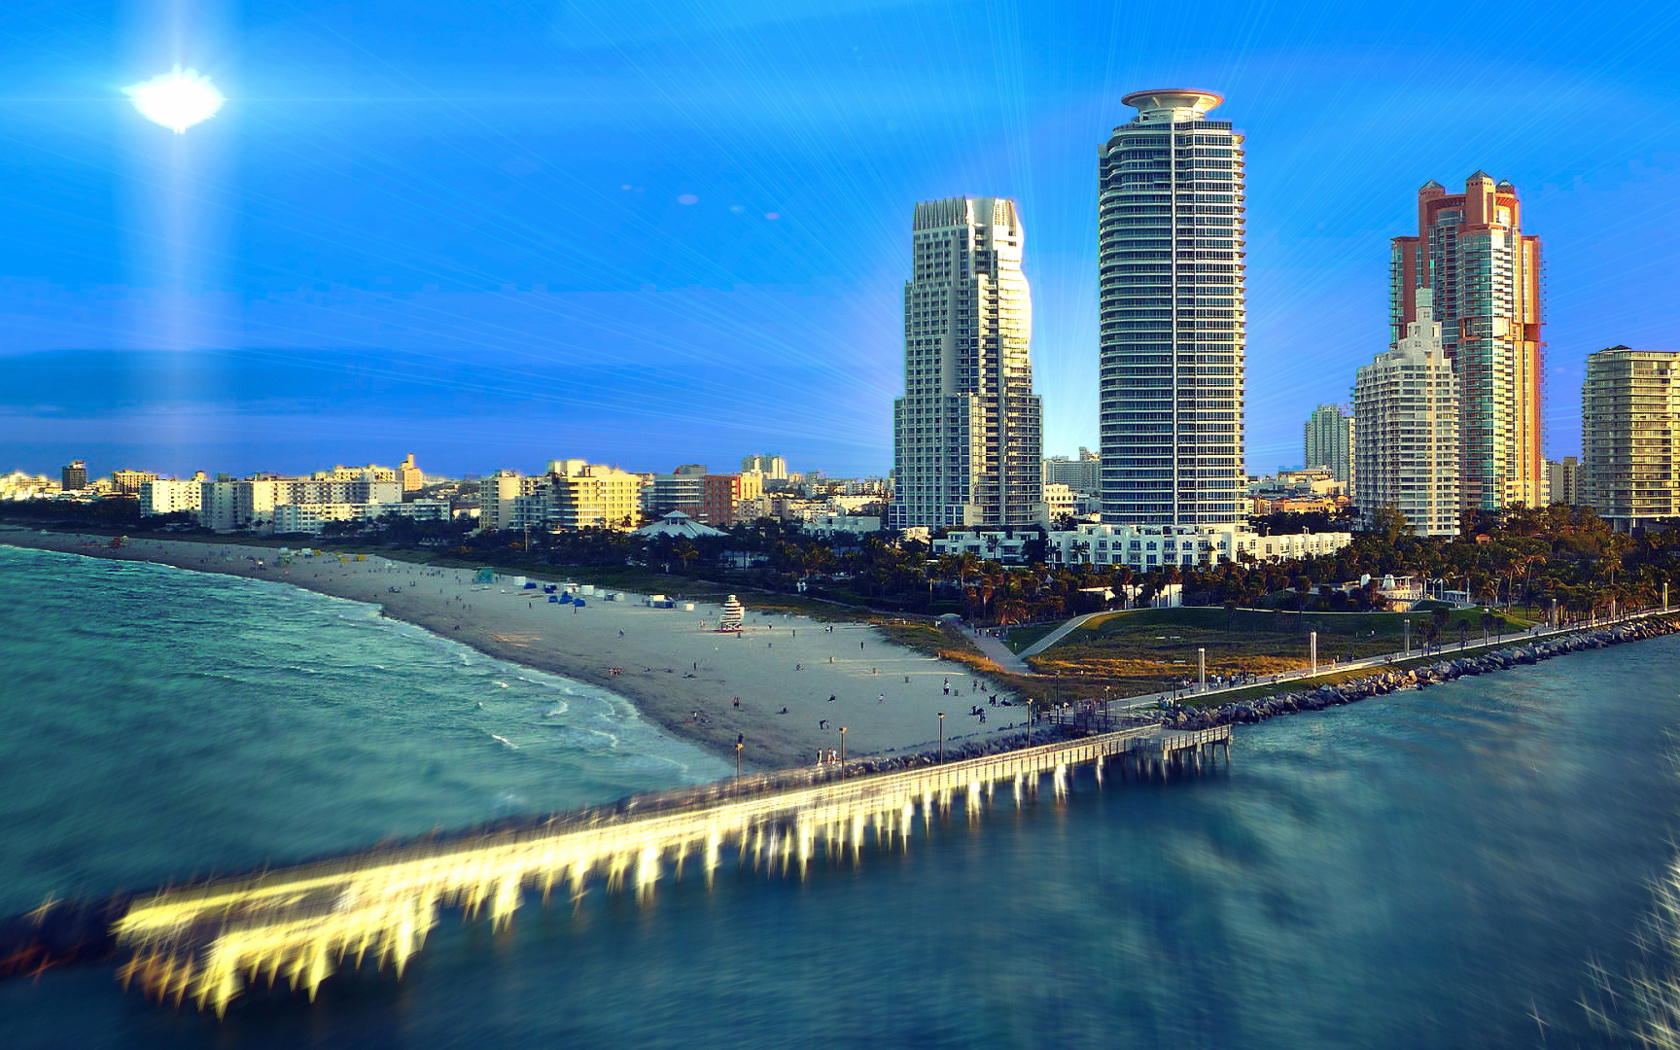 Das Miami Beach with Hotels Wallpaper 1680x1050